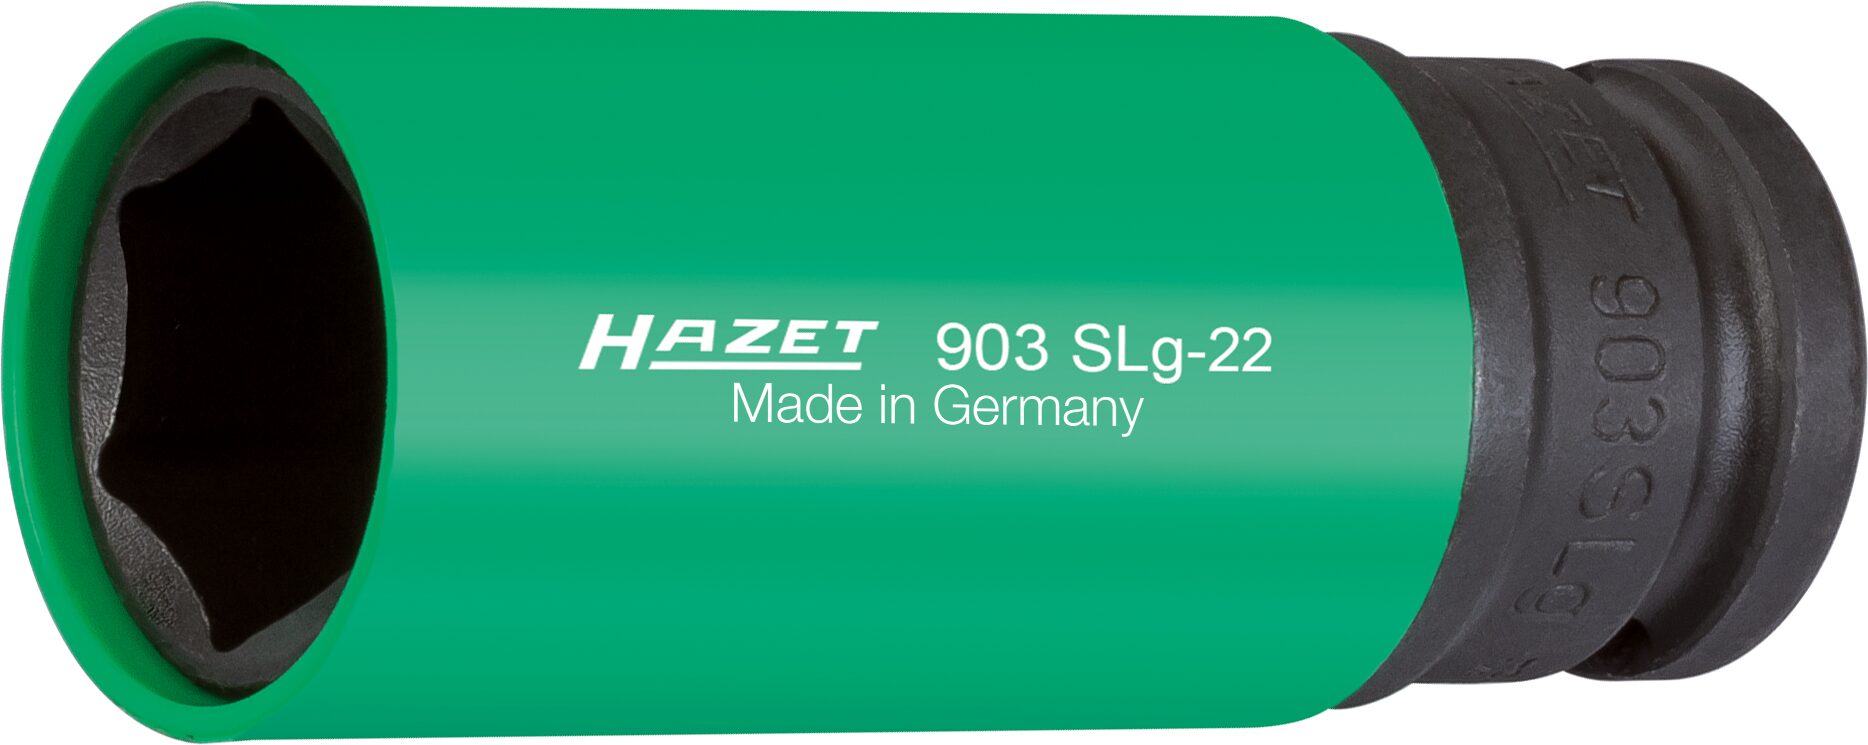 HAZET Schlag-, Maschinenschrauber Steckschlüsseleinsatz · Sechskant 903SLG-22 · Vierkant hohl 12,5 mm (1/2 Zoll) · Außen Sechskant-Tractionsprofil · 22 mm